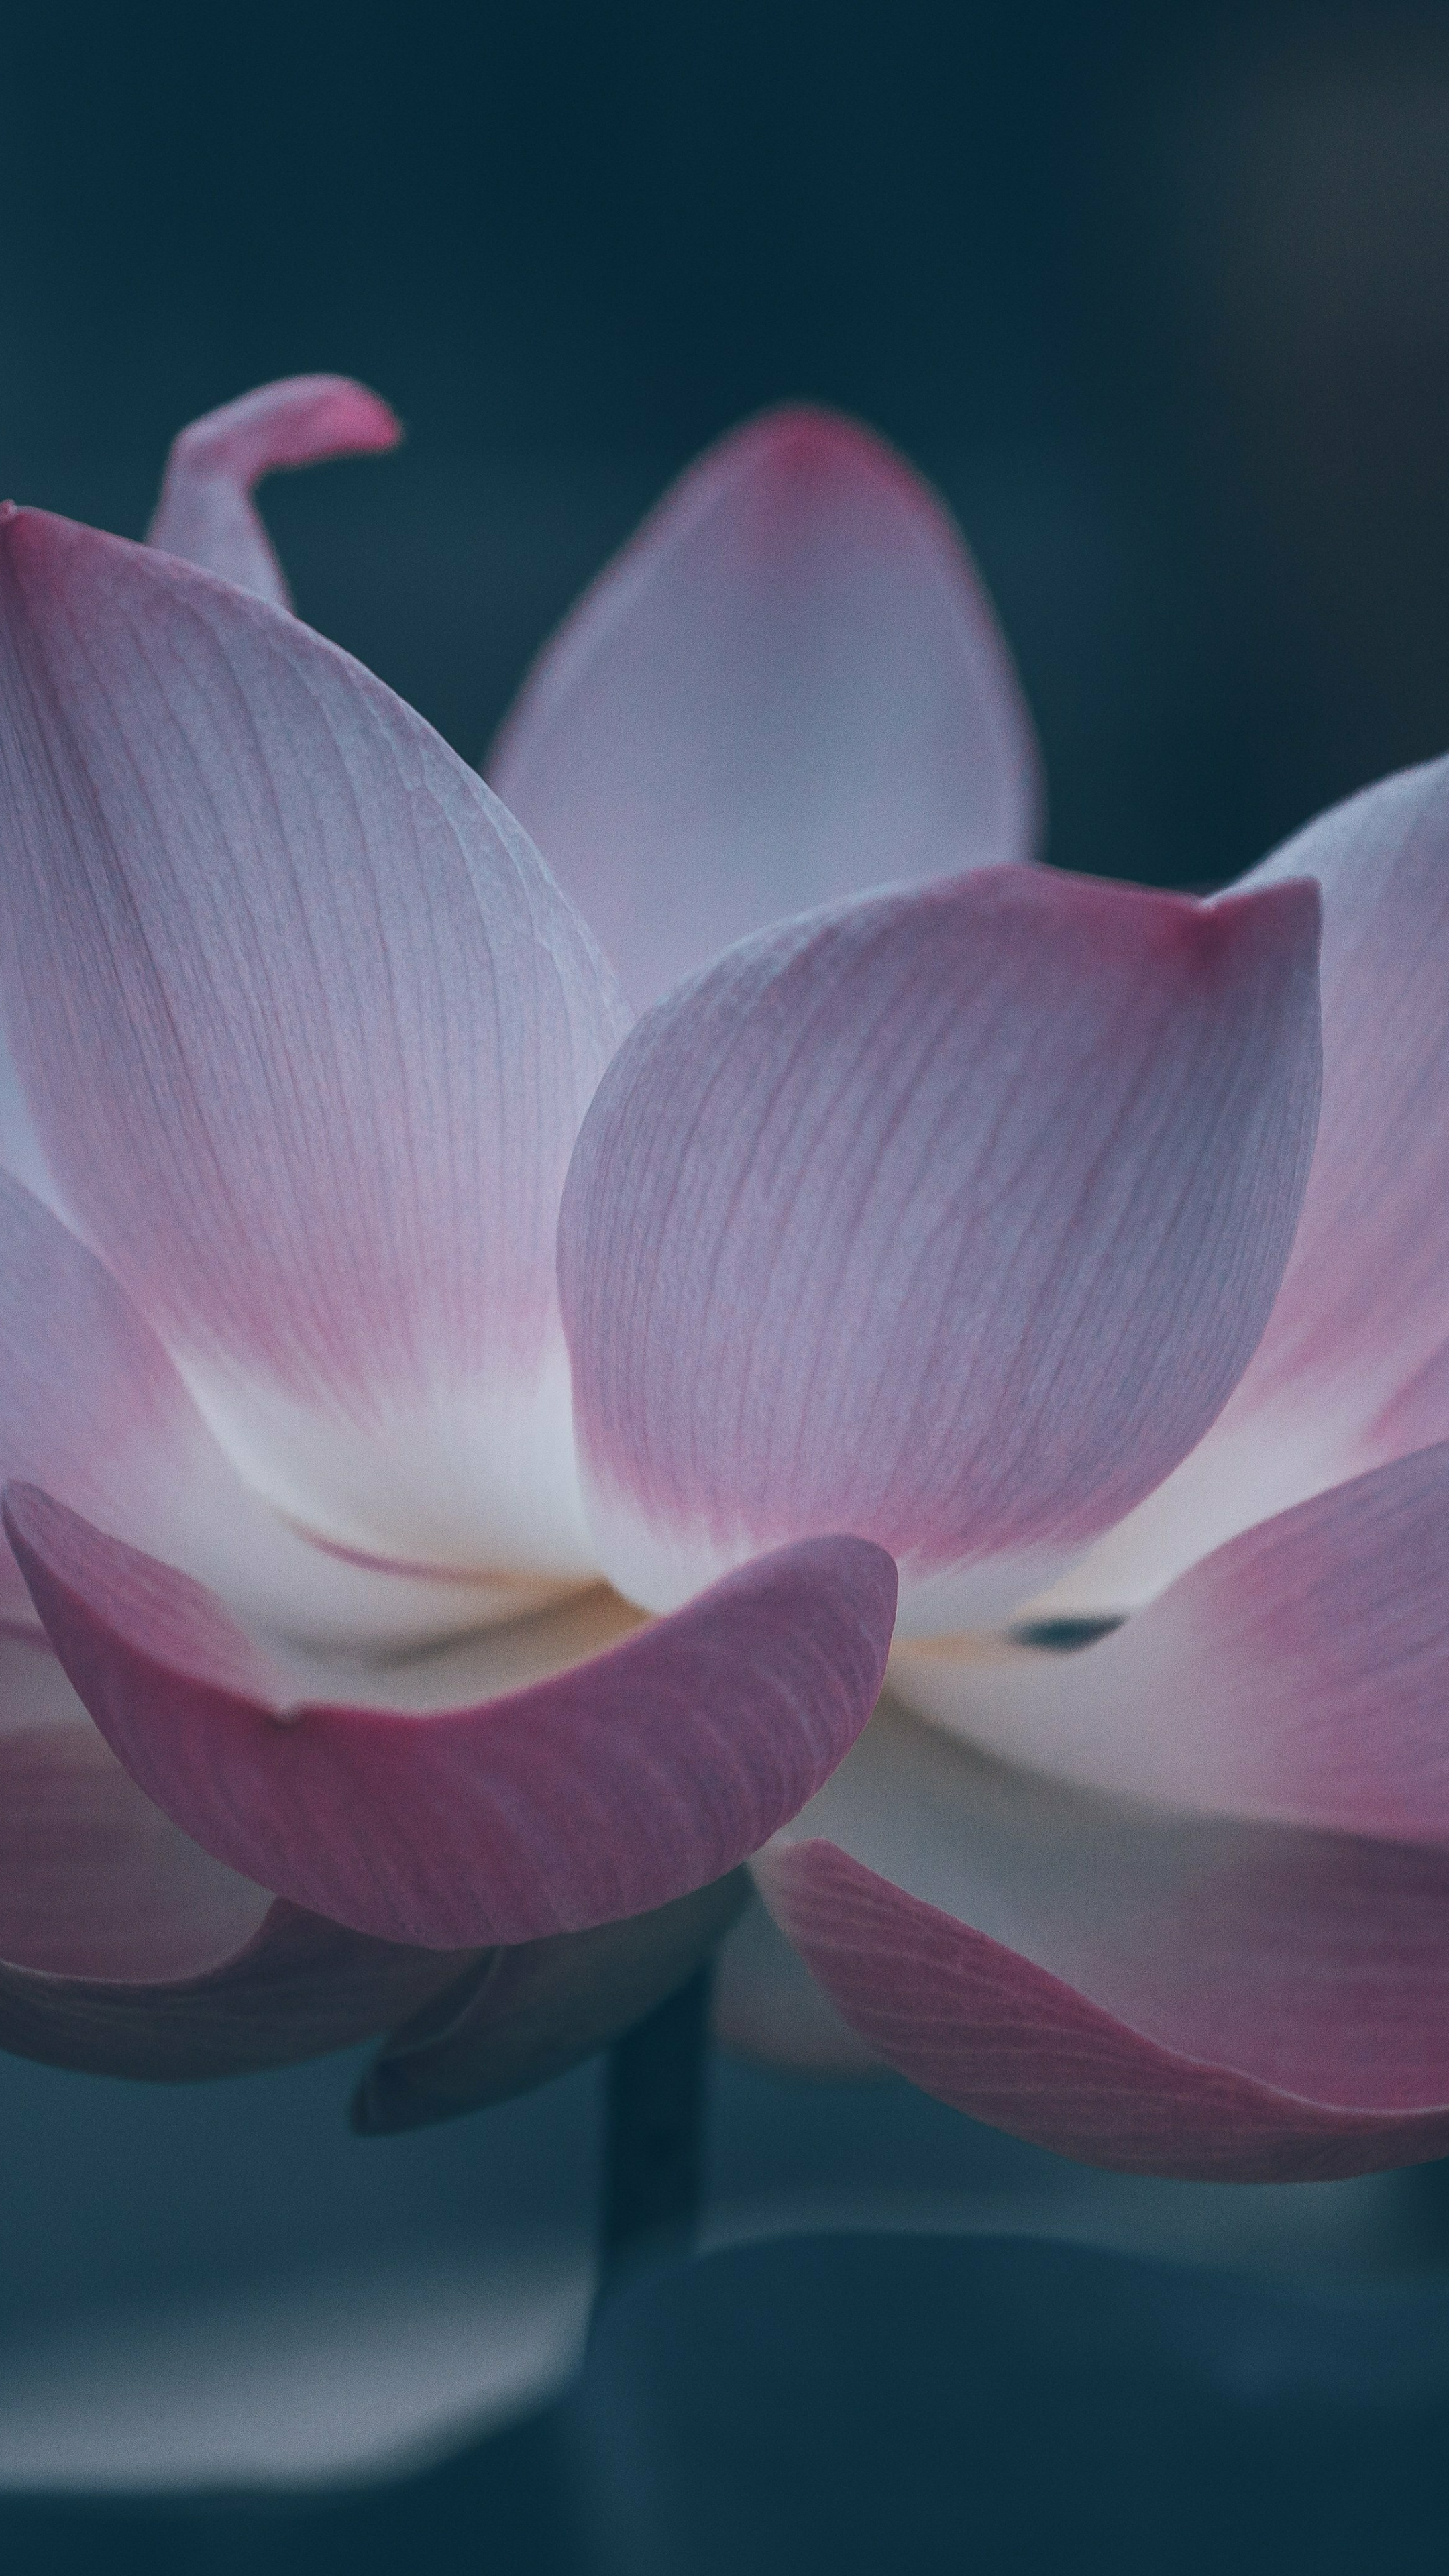 Bloom beautiful pink lotus, Sony Xperia Z5 Premium Dual, 2160x3840 4K Phone